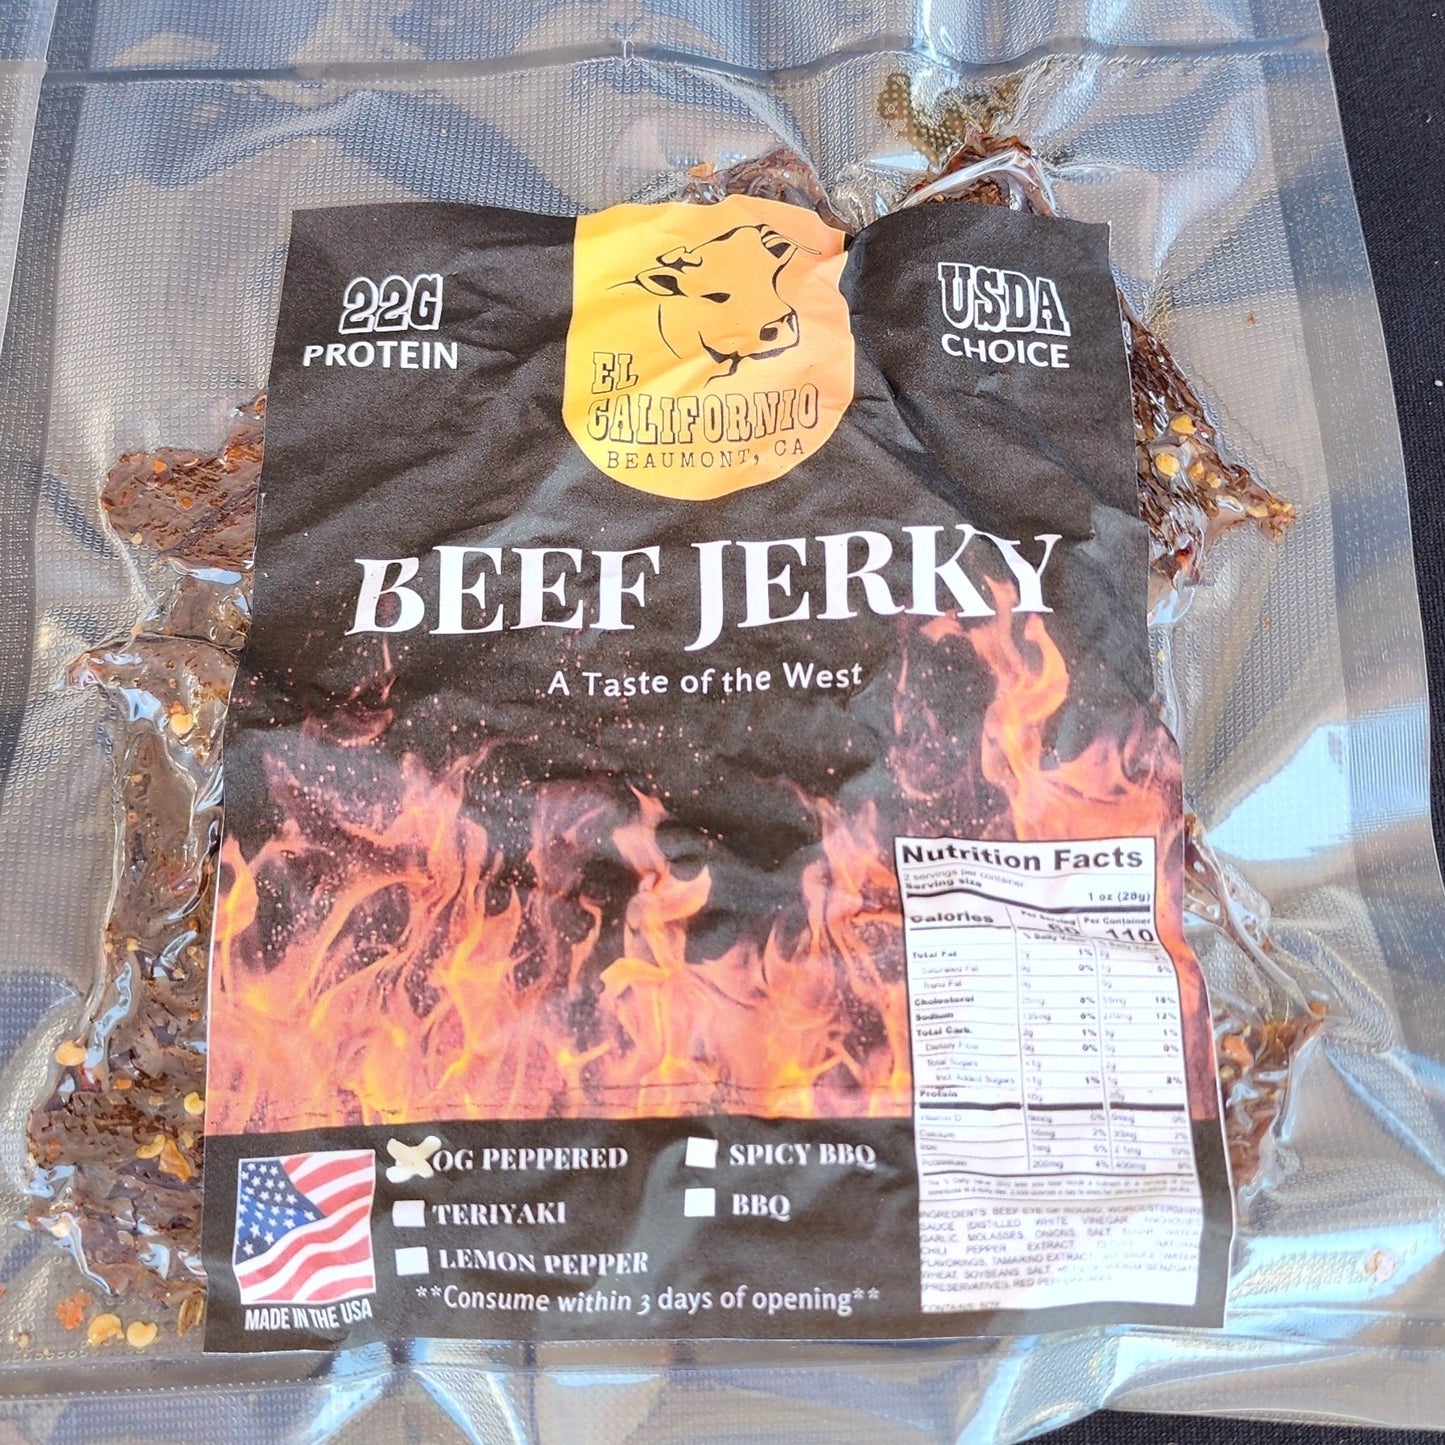 The OG Peppered Beef Jerky